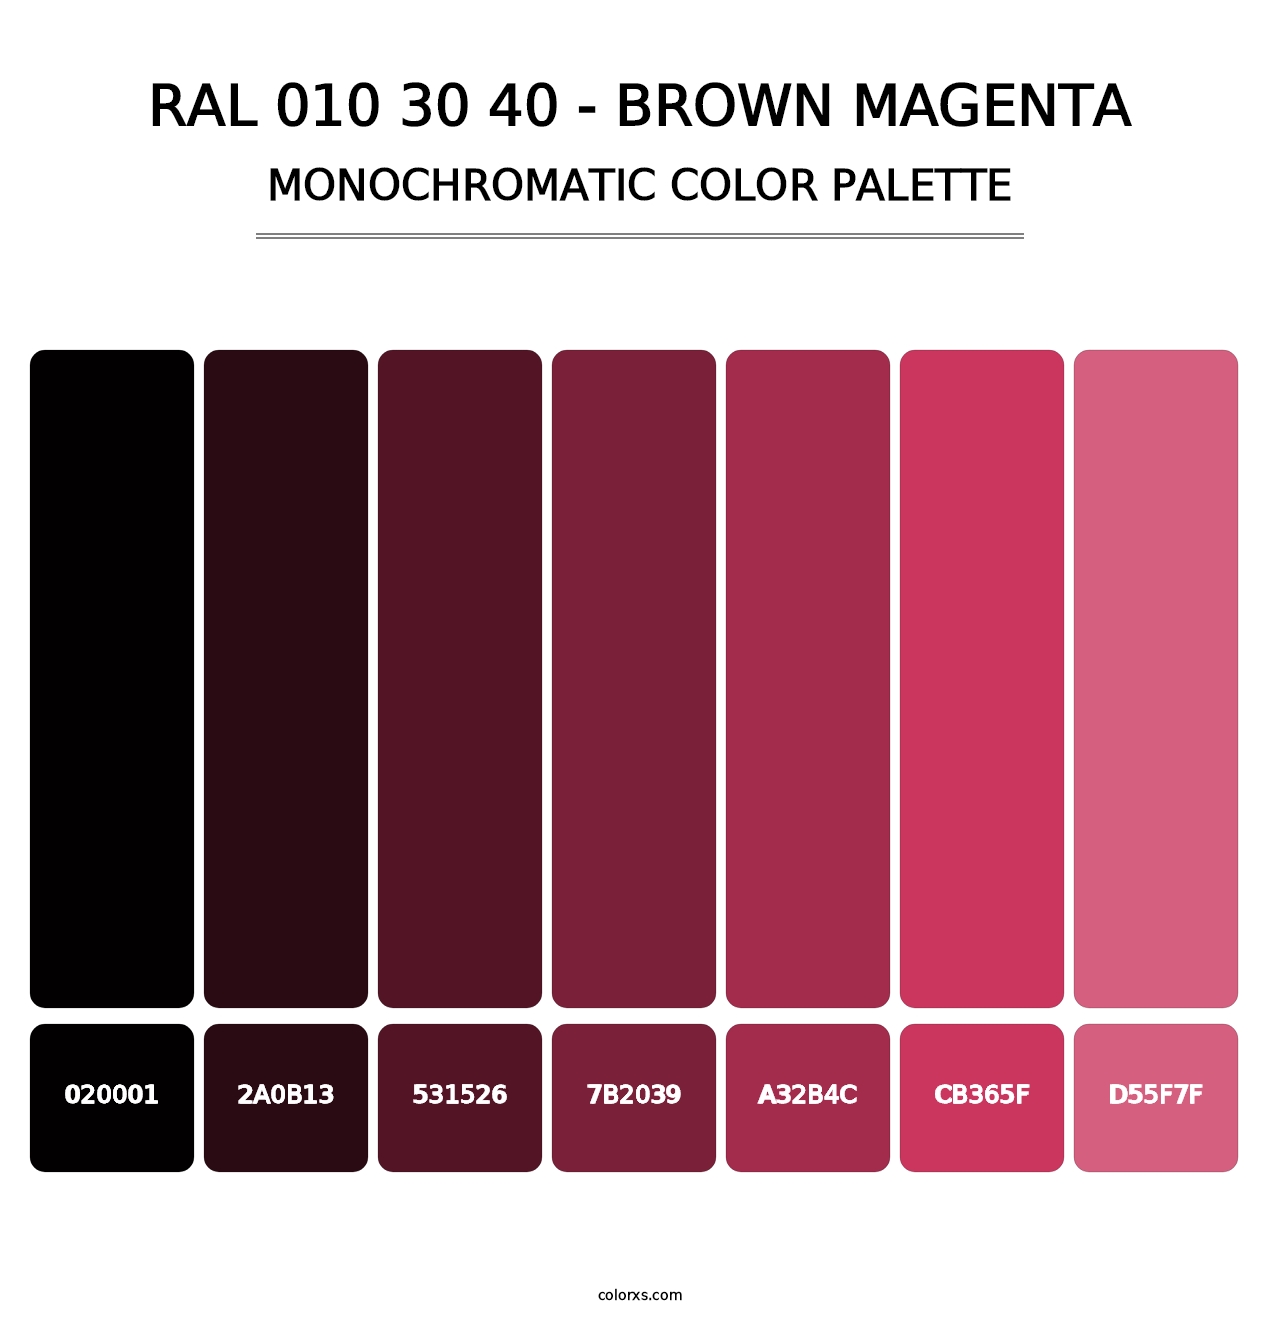 RAL 010 30 40 - Brown Magenta - Monochromatic Color Palette